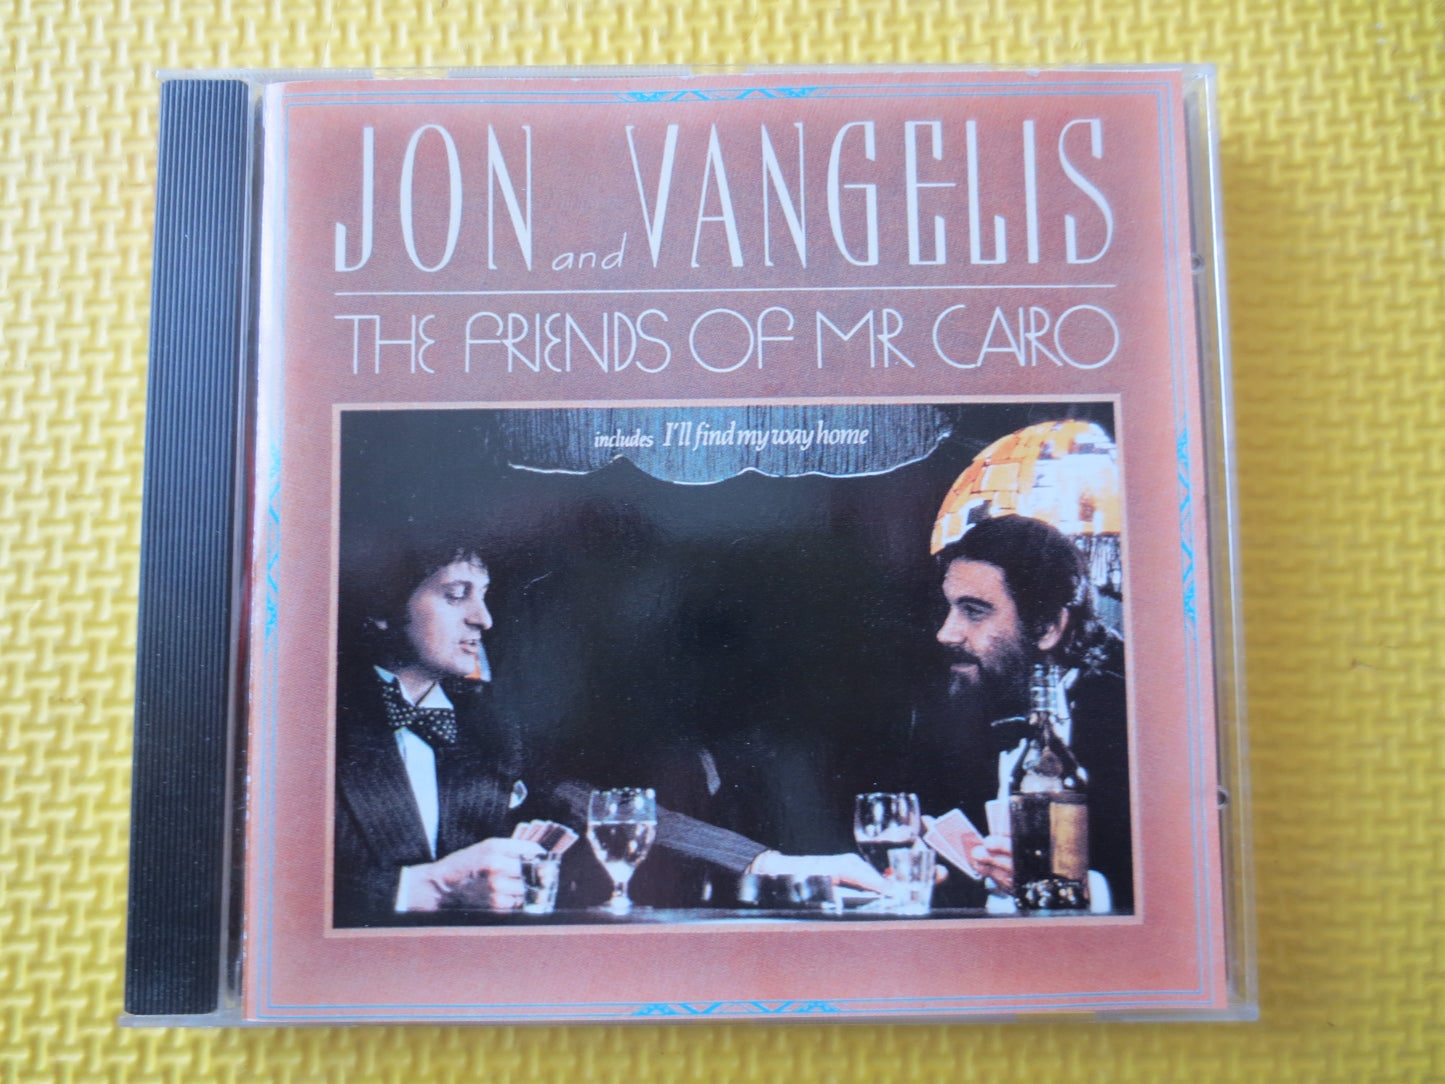 JON and VANGELIS, FRIENDS of Mr Cairo, Jon and Vangelis Cd, Music Cd, Cd Music, Rock Music Cd, Rock Cds, cds, 1986 Compact Disc